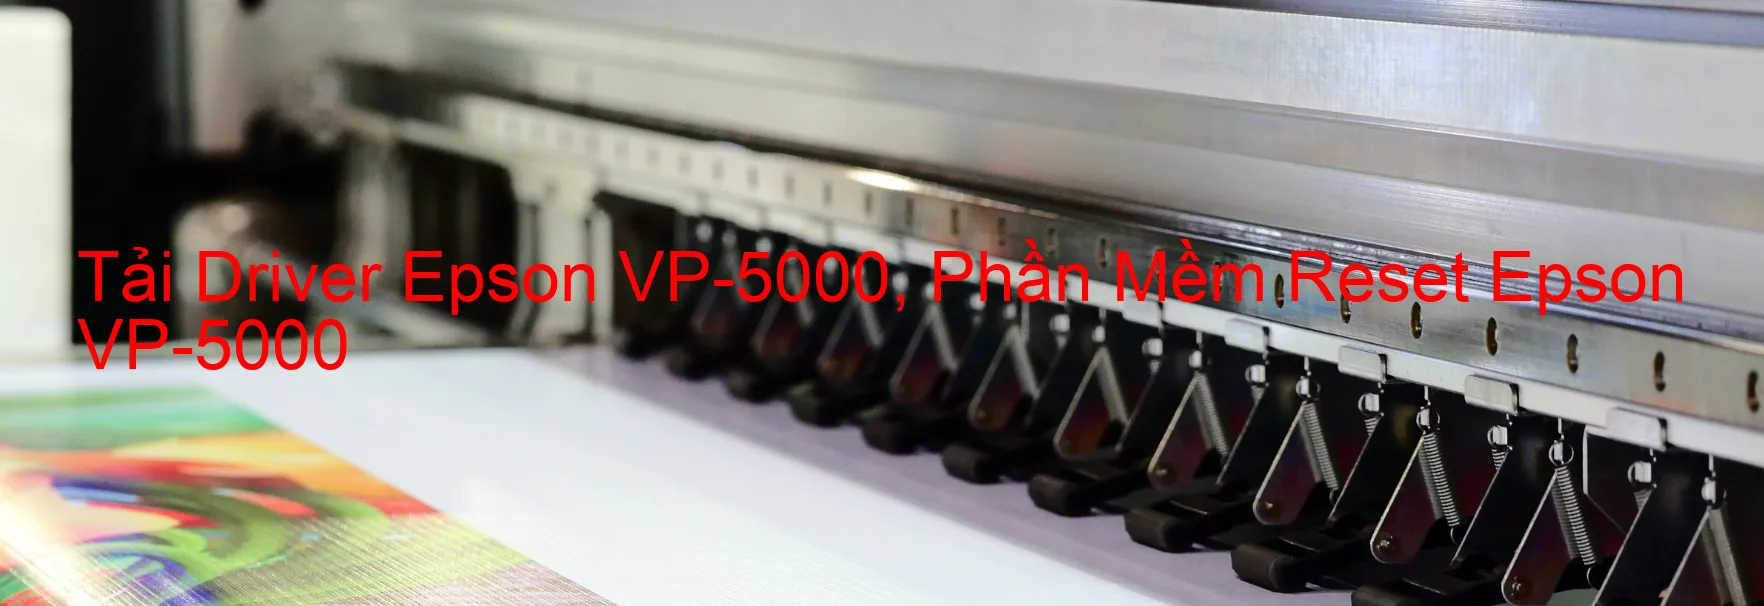 Driver Epson VP-5000, Phần Mềm Reset Epson VP-5000